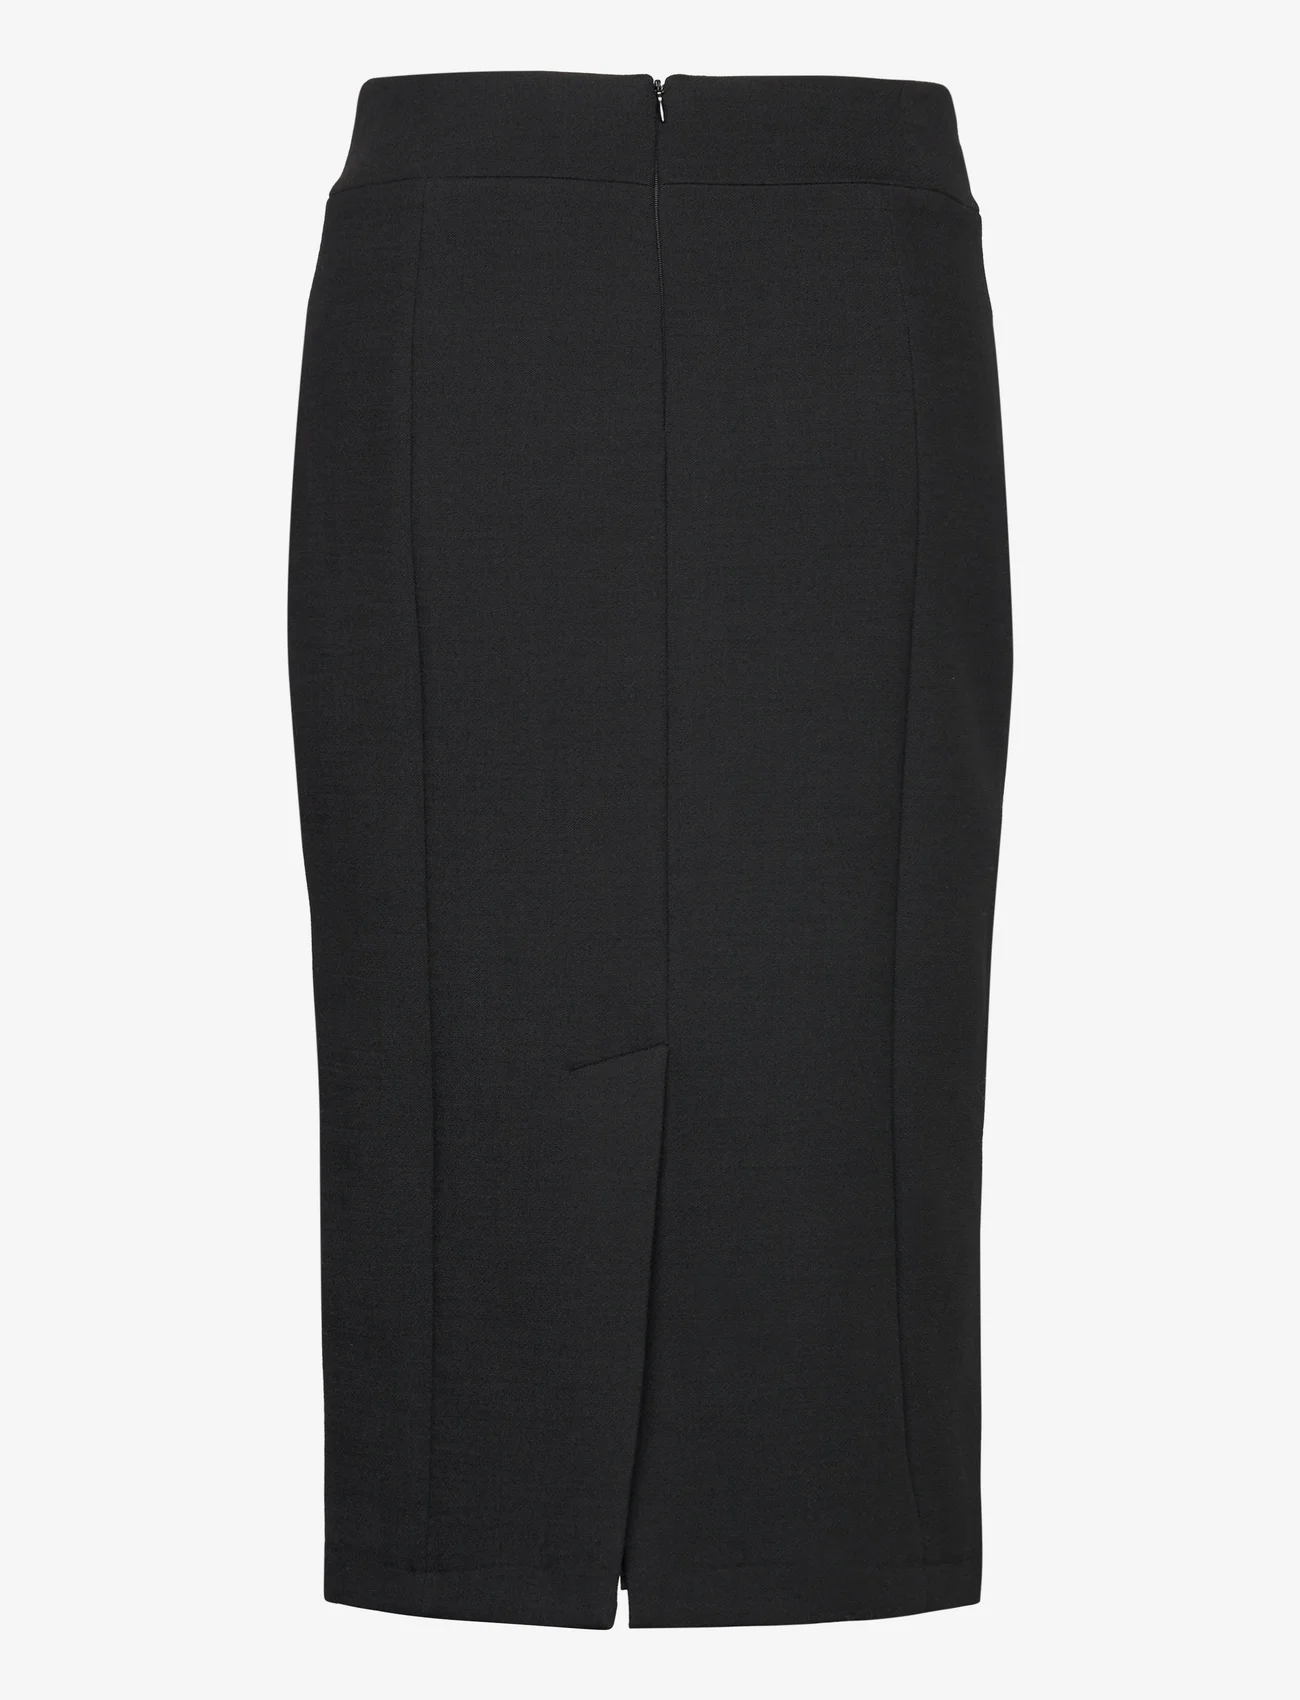 Andiata - Fibi 80 skirt - ołówkowe spódnice - black - 1